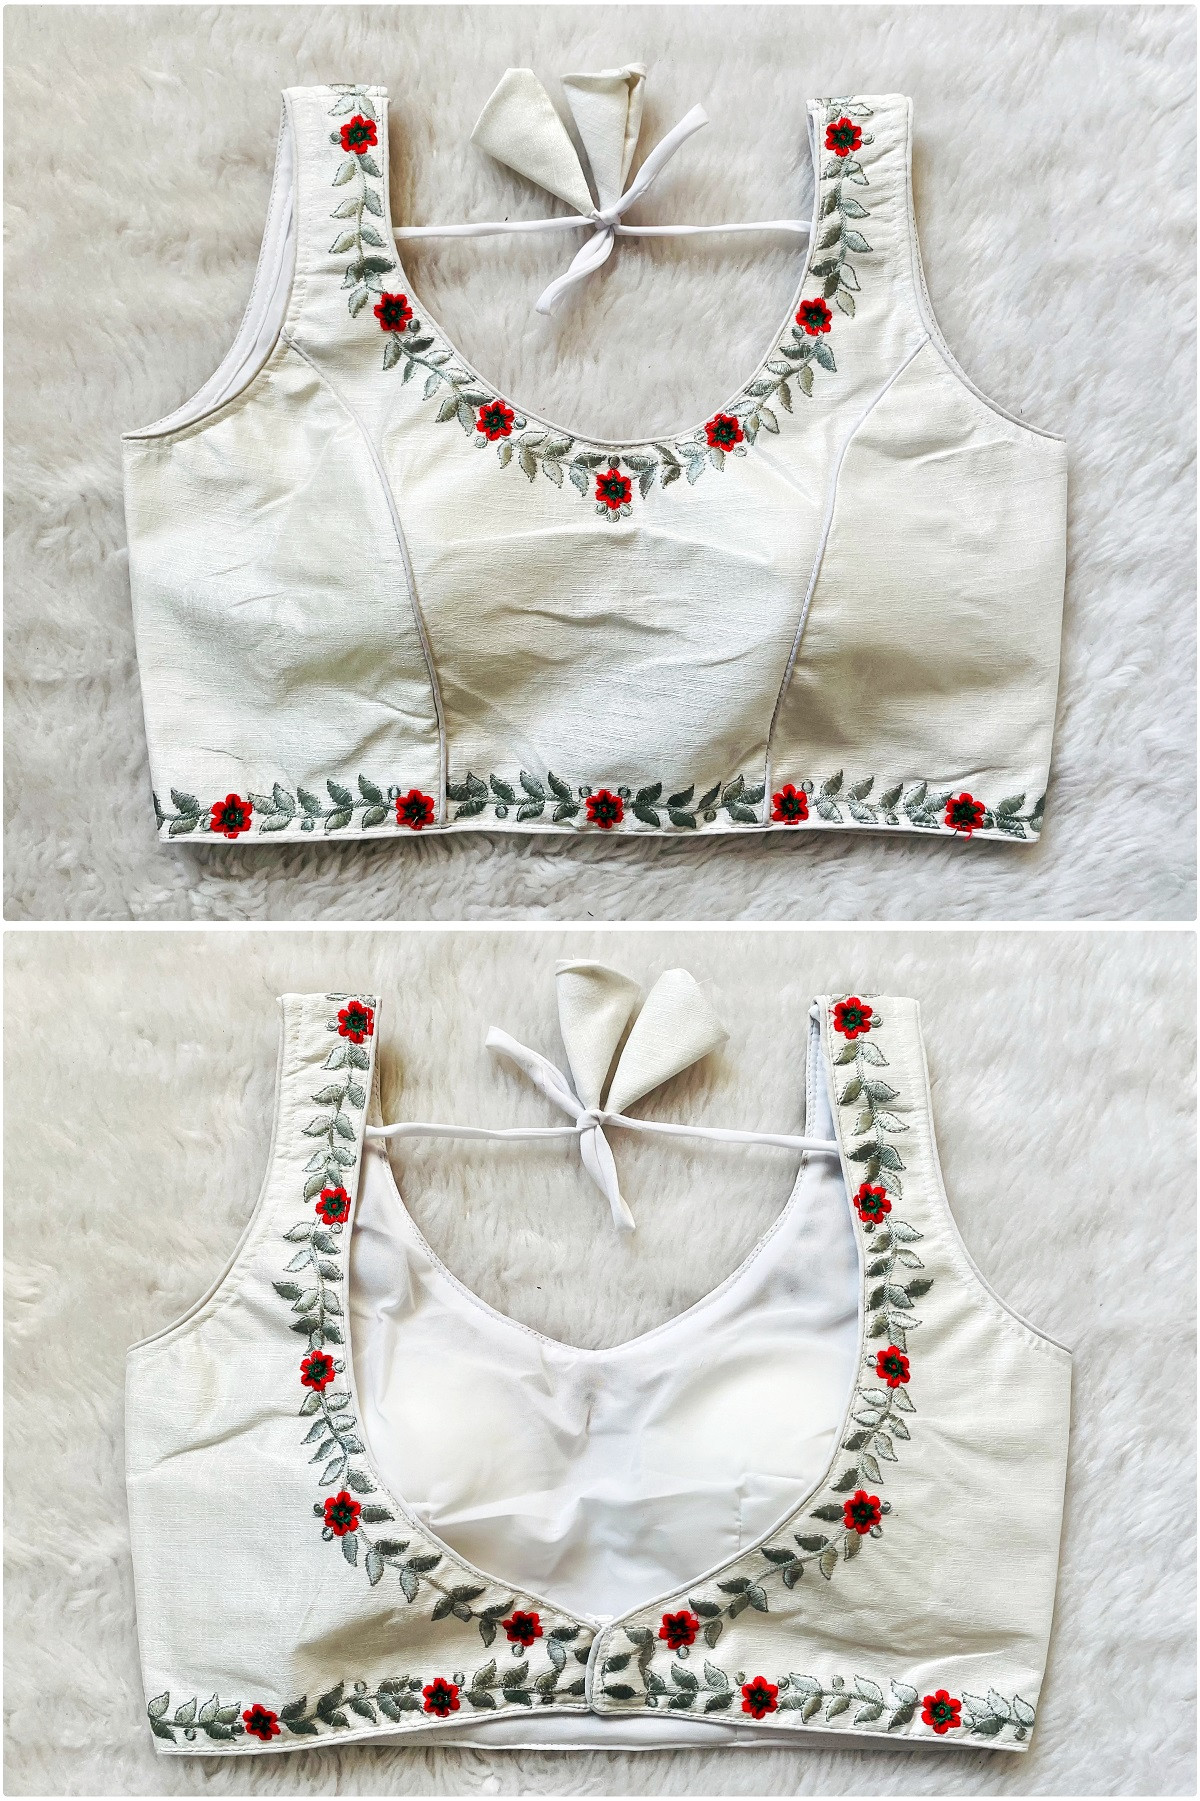 Embroidered Phantom Silk Designer Blouse - White(3XL)